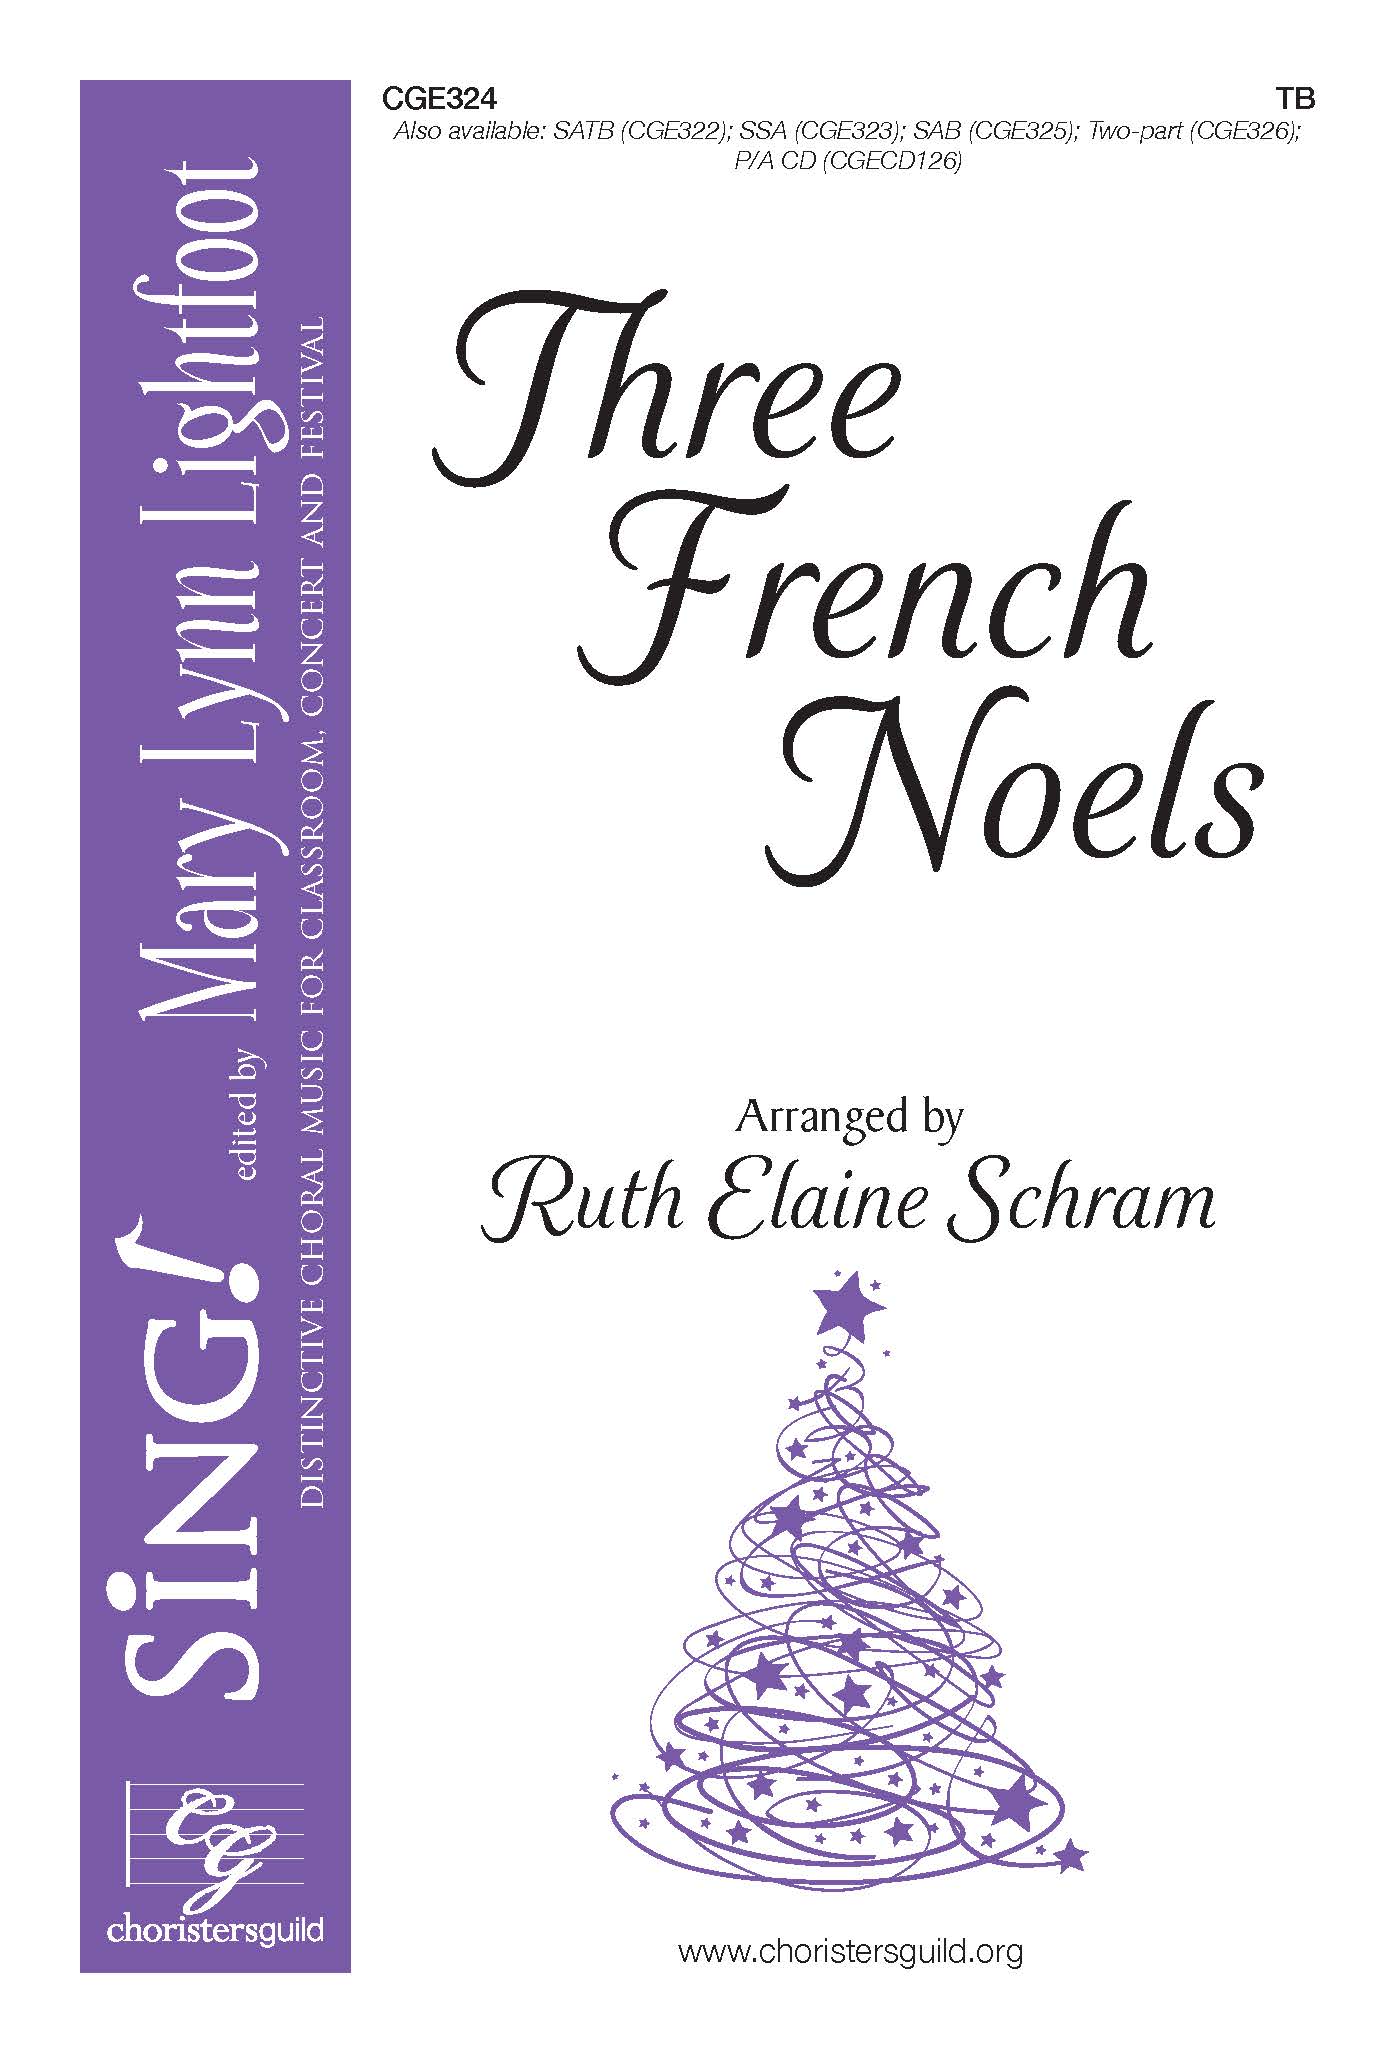 Three French Noels - TB